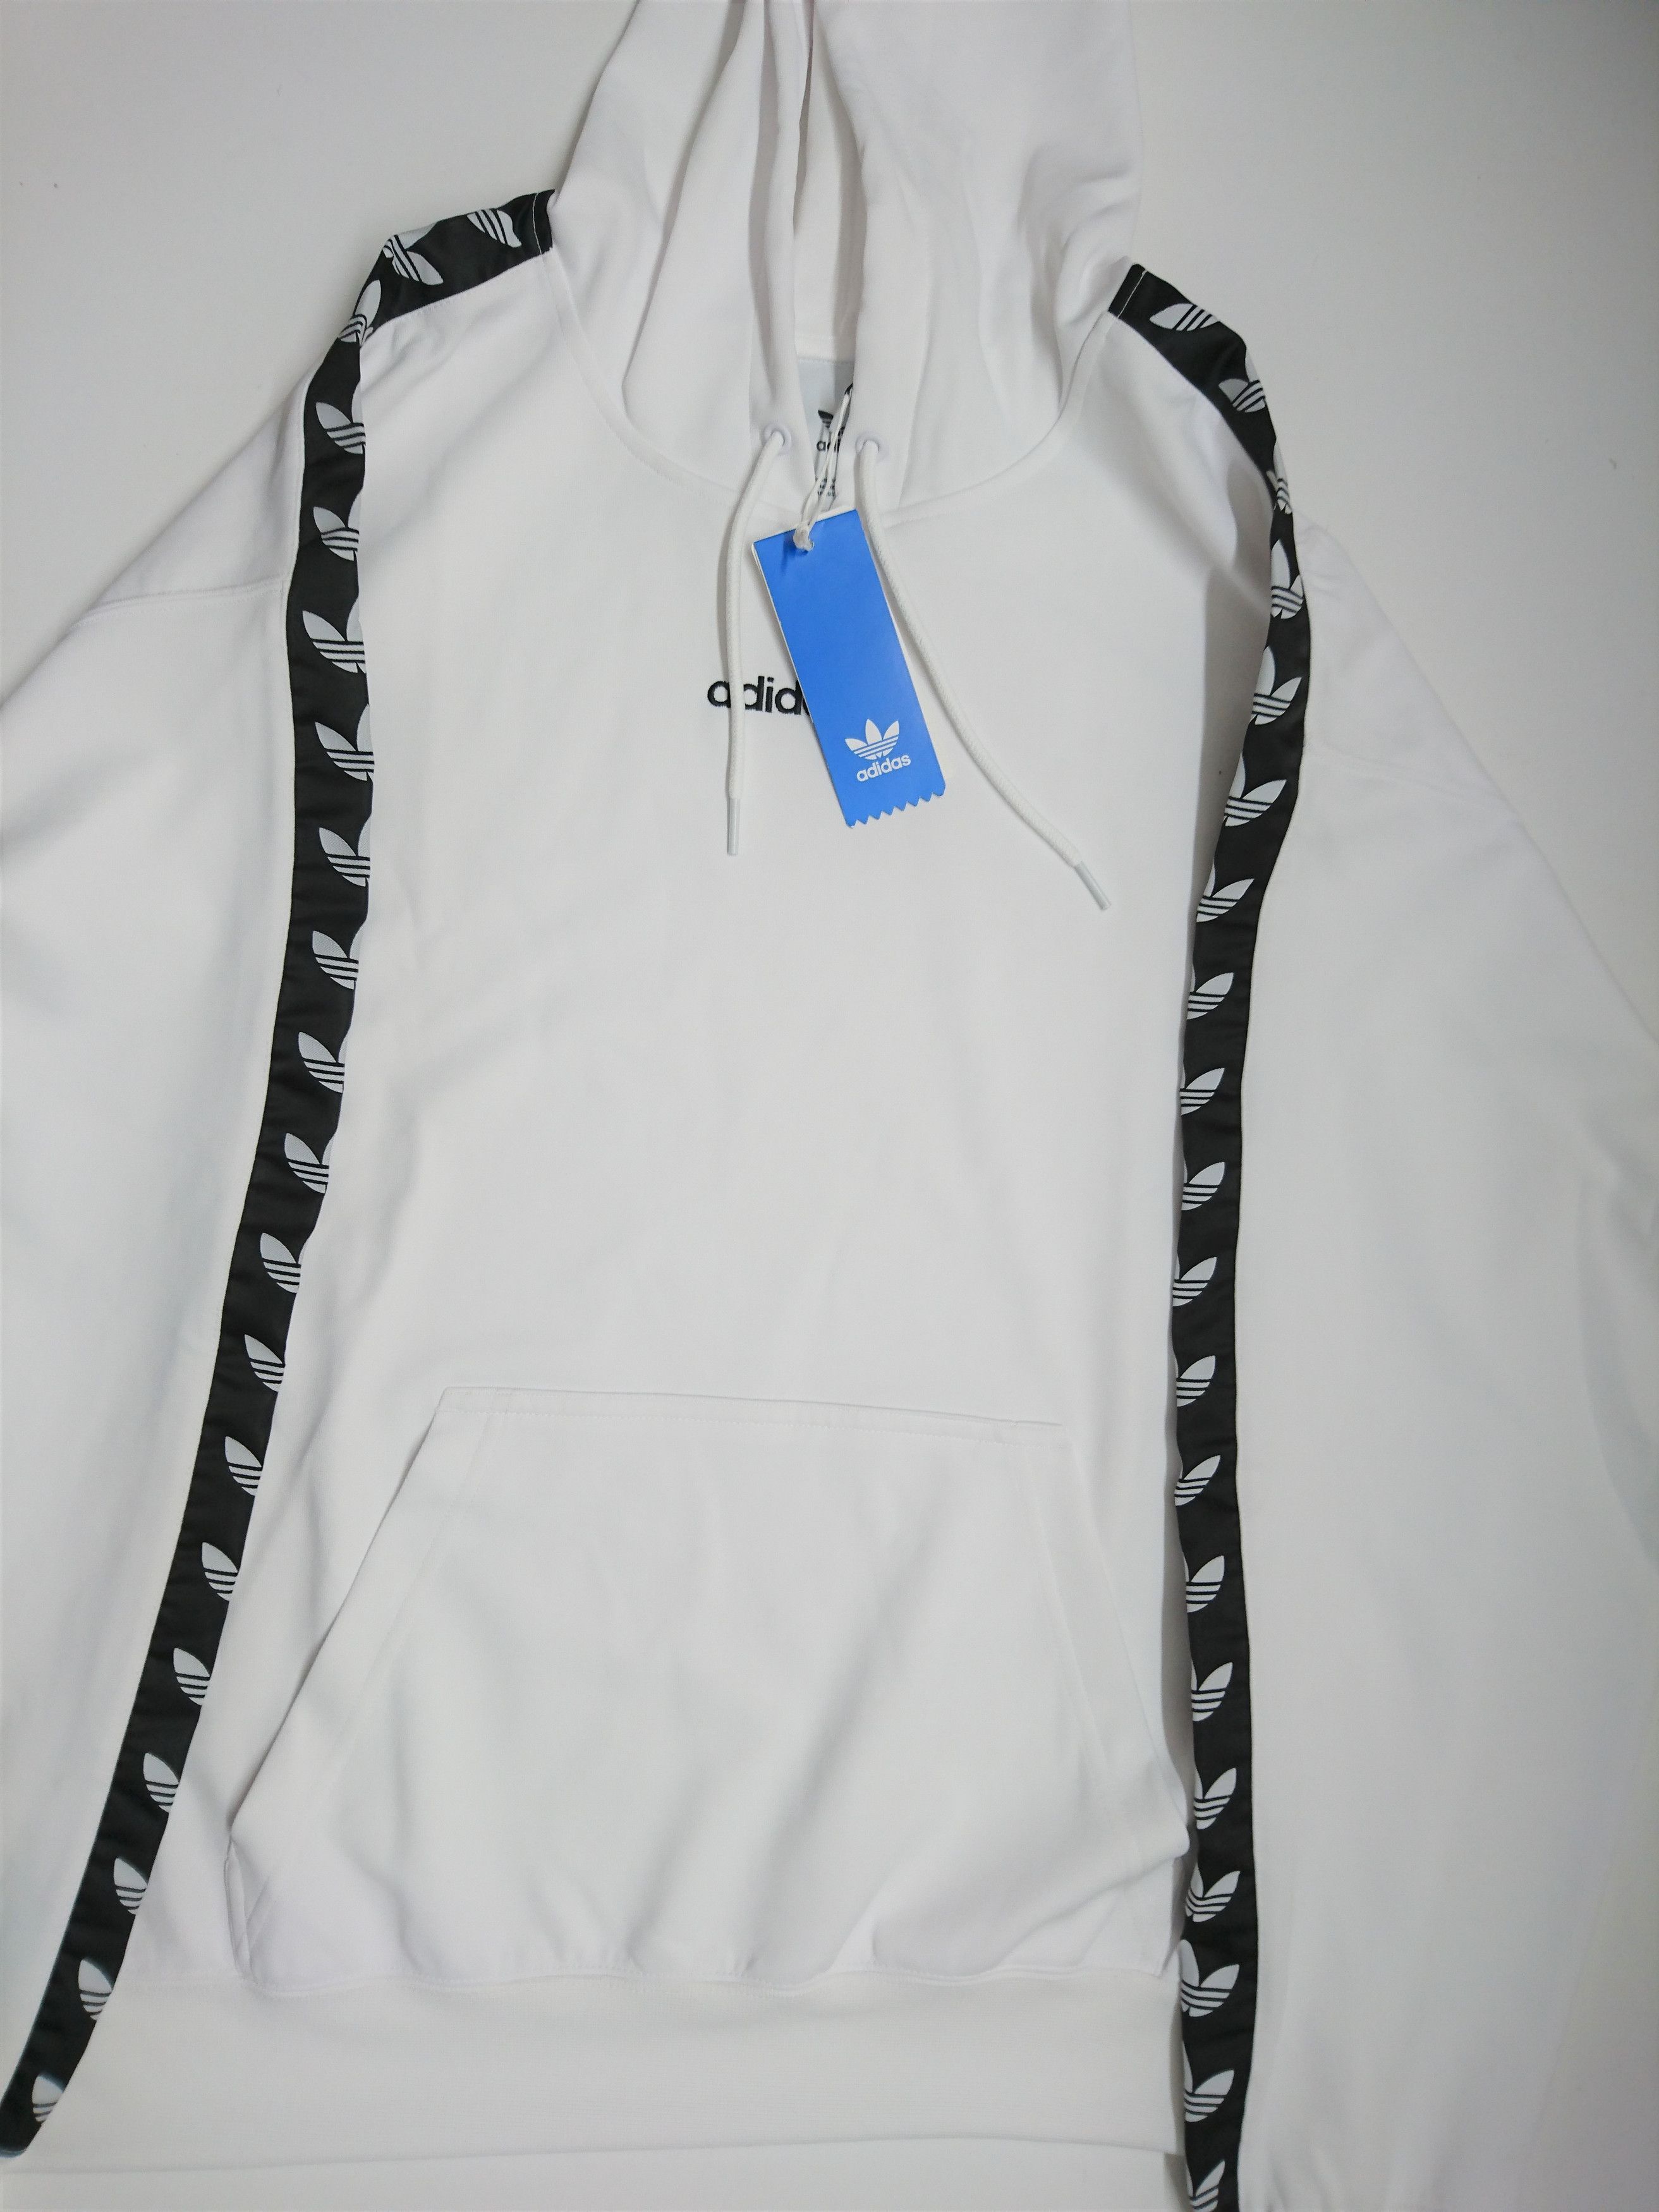 Adidas Adidas Originals TNT Tape pullover hoodie Size US M / EU 48-50 / 2 - 10 Thumbnail